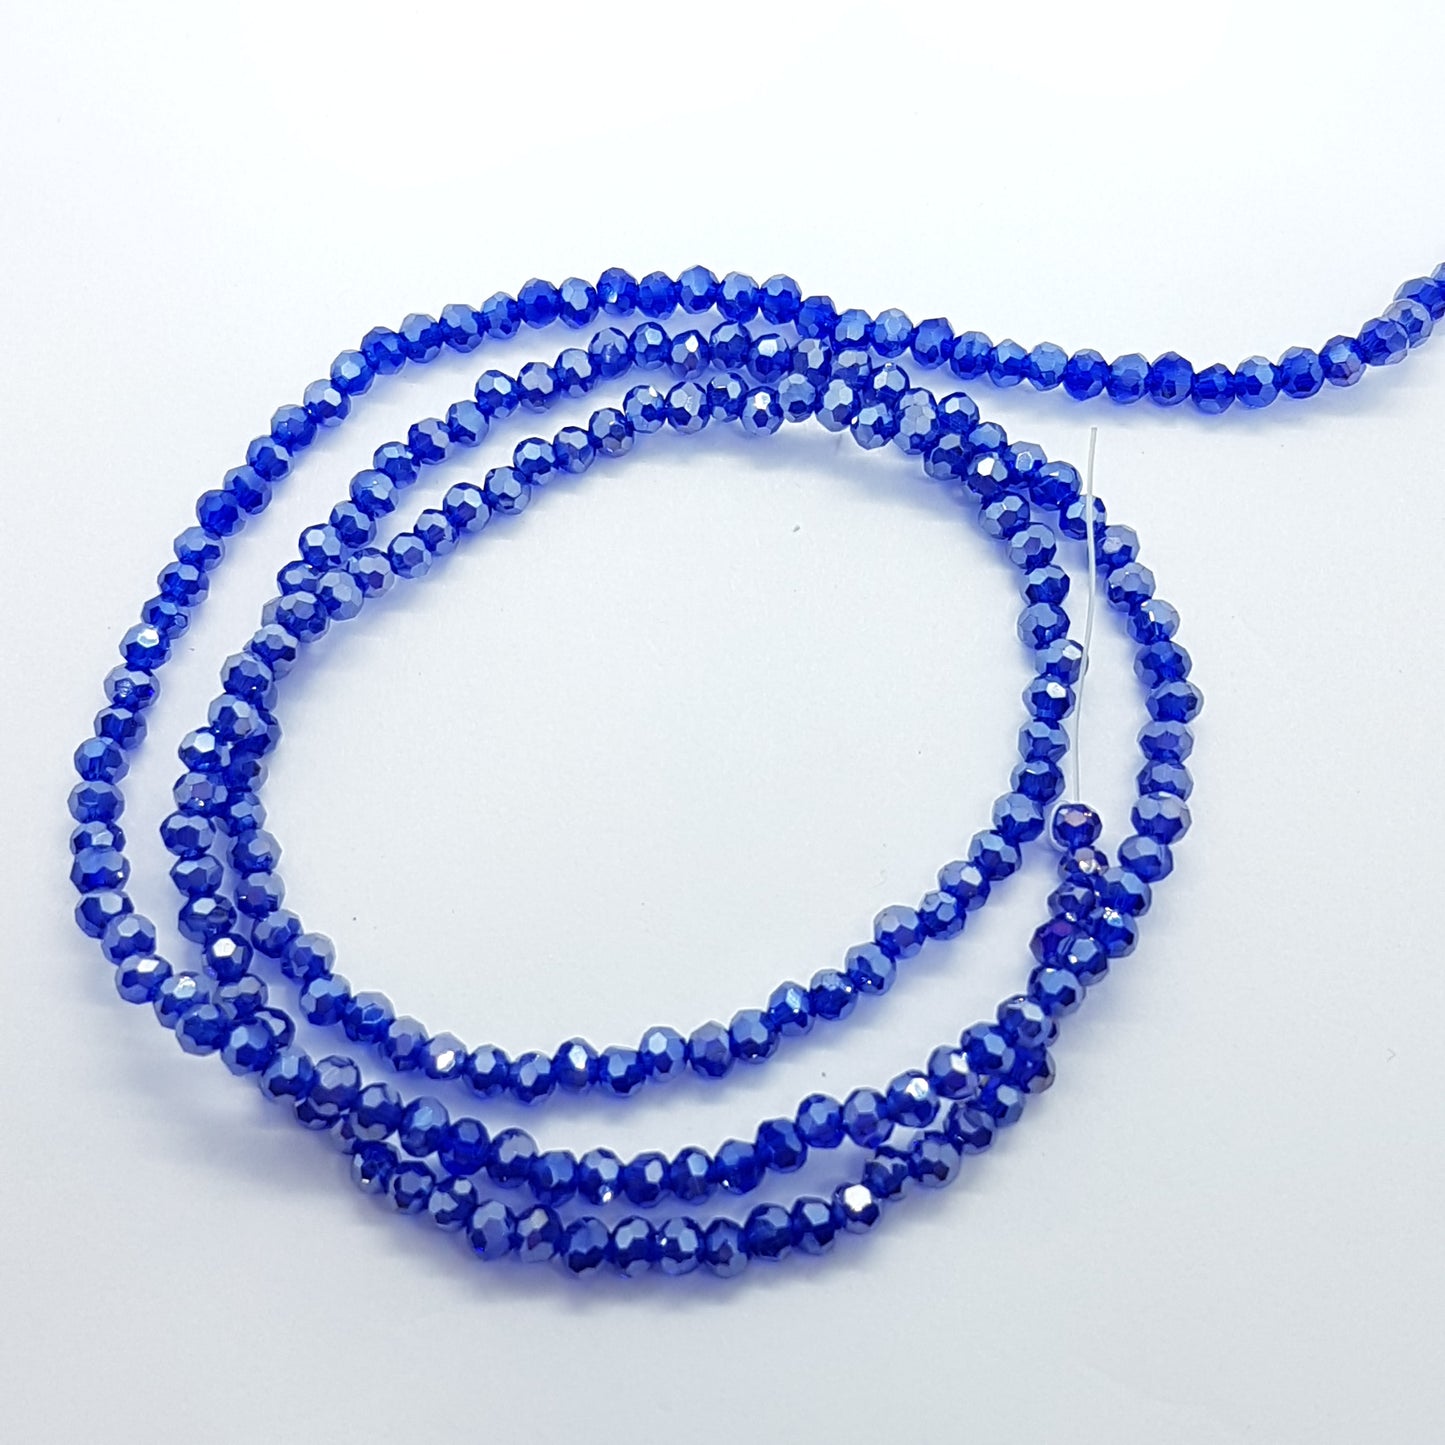 200pc Blue AB Round Crystal Beads